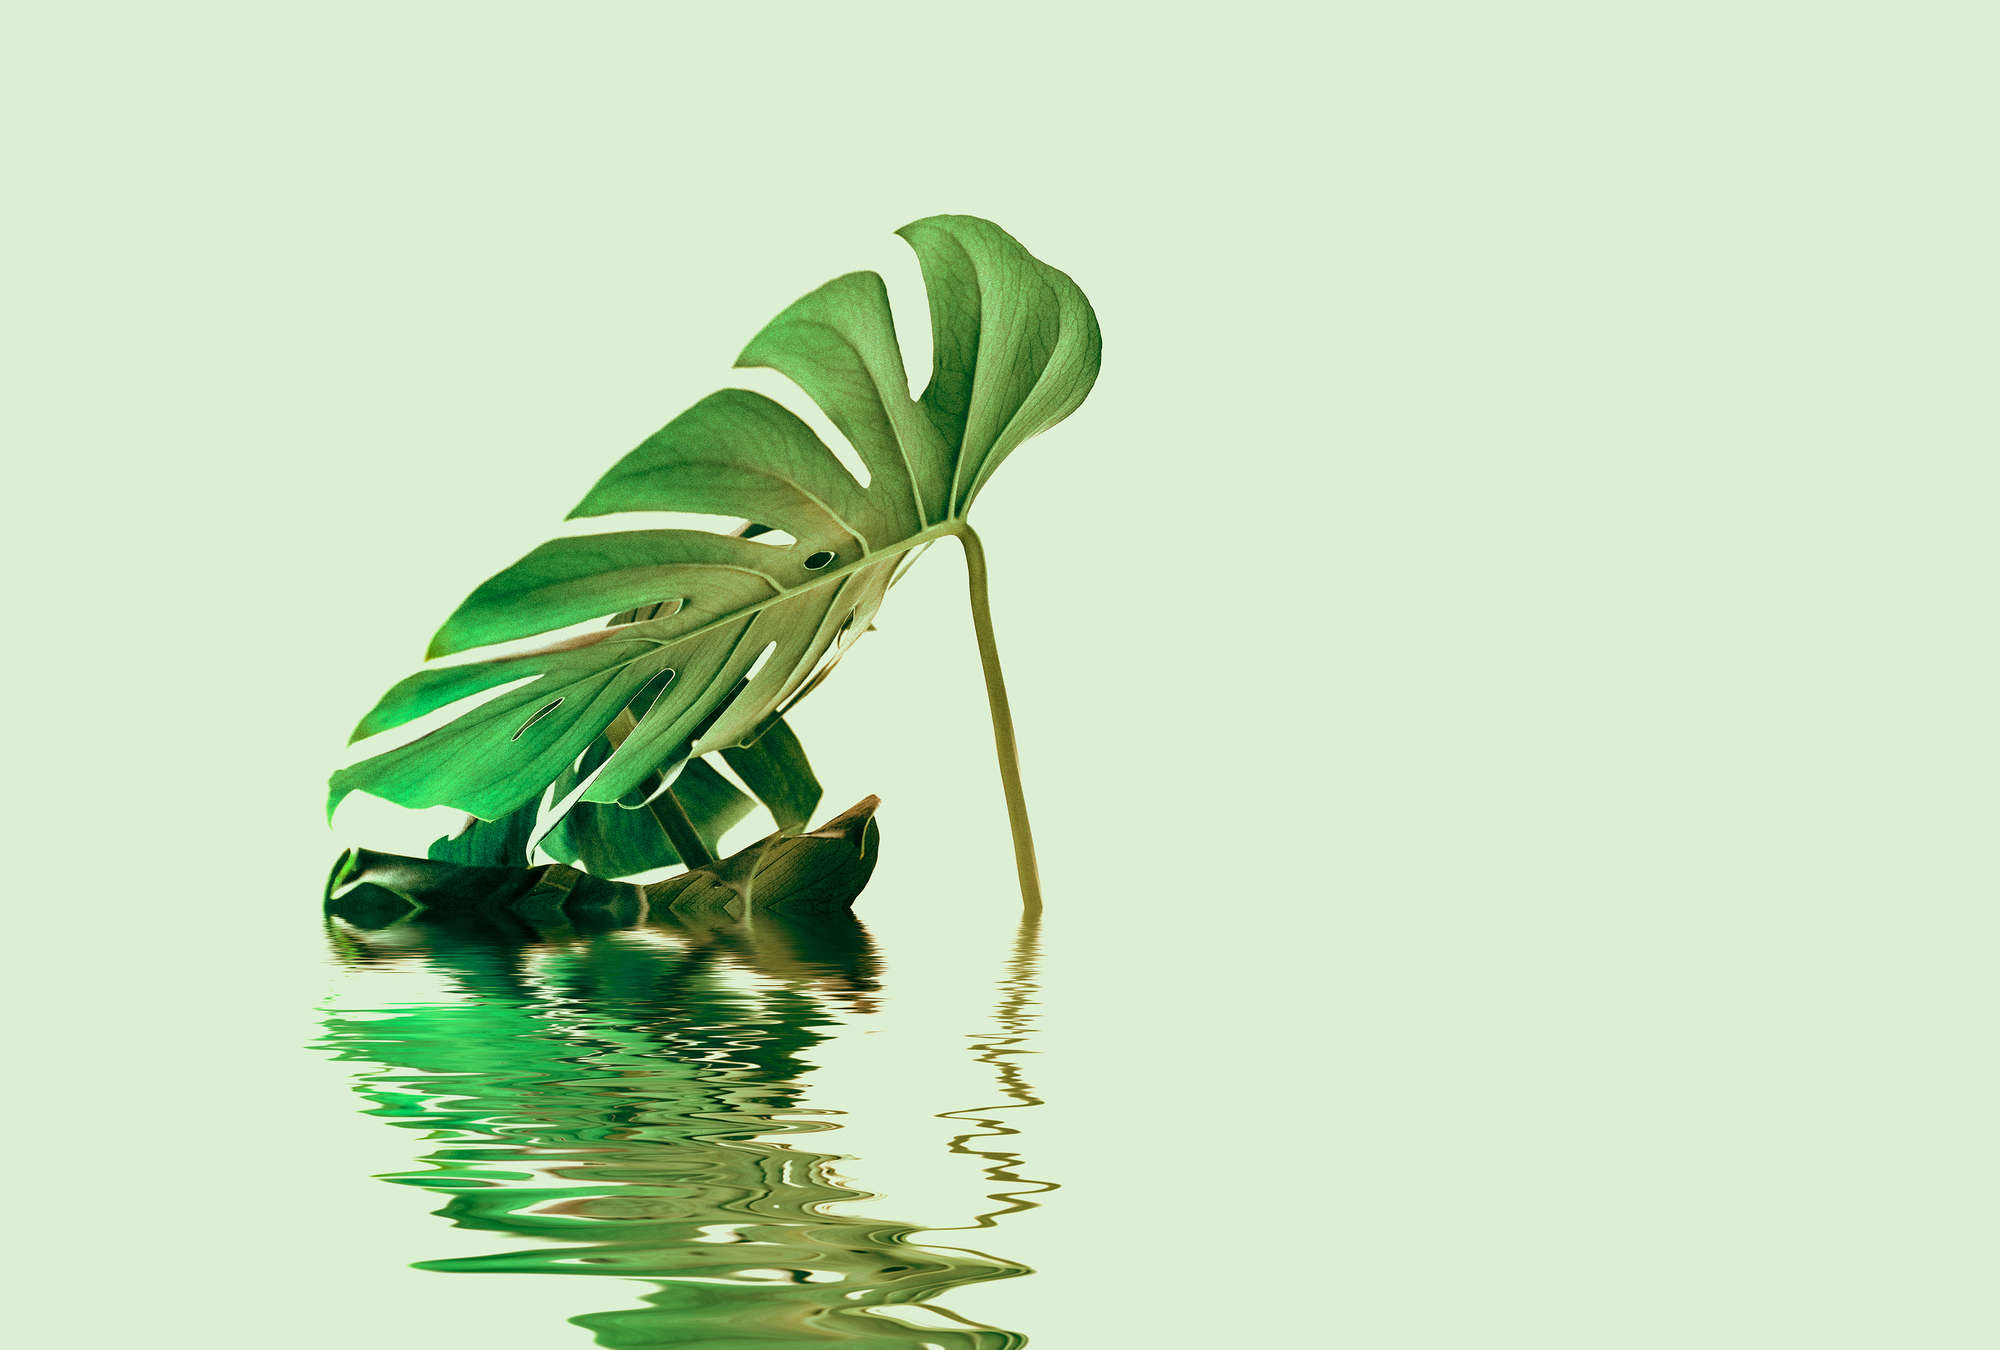             Monstera leaf in water mural for wellness design
        